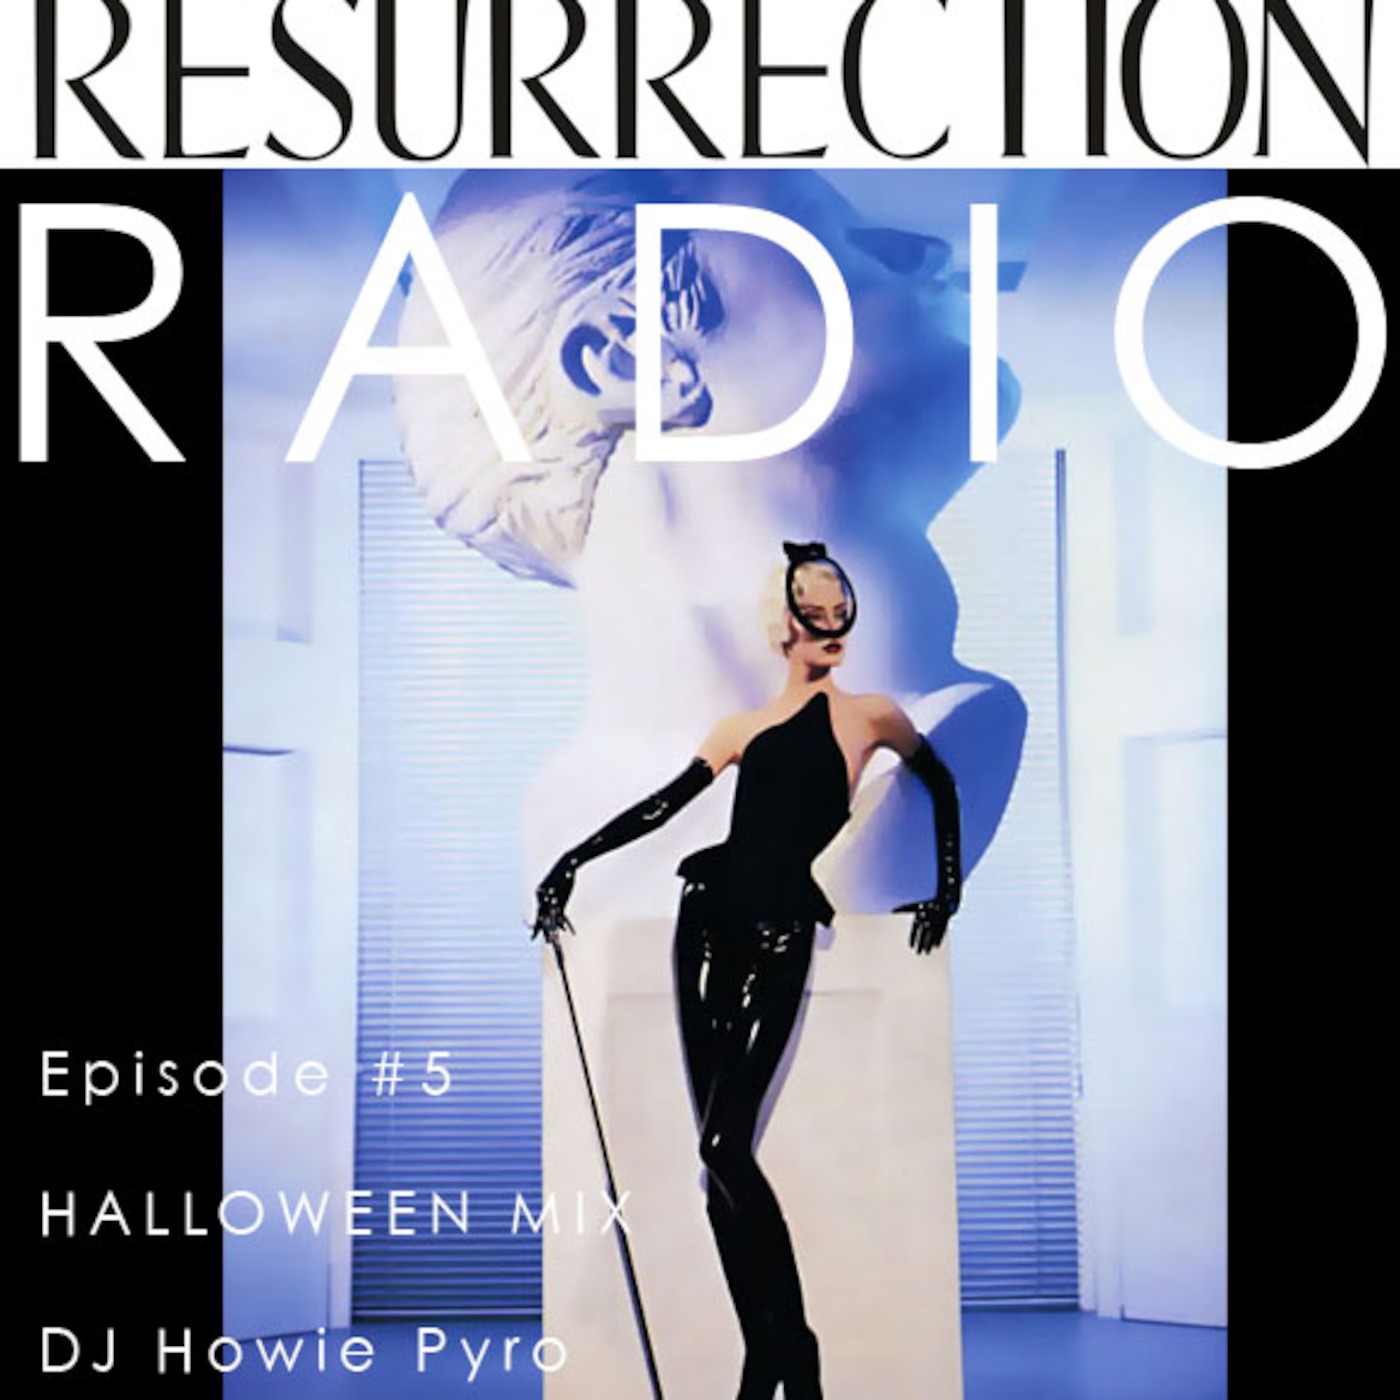 Resurrection Radio Episode 5 - Halloween Mix DJ Howie Pyro